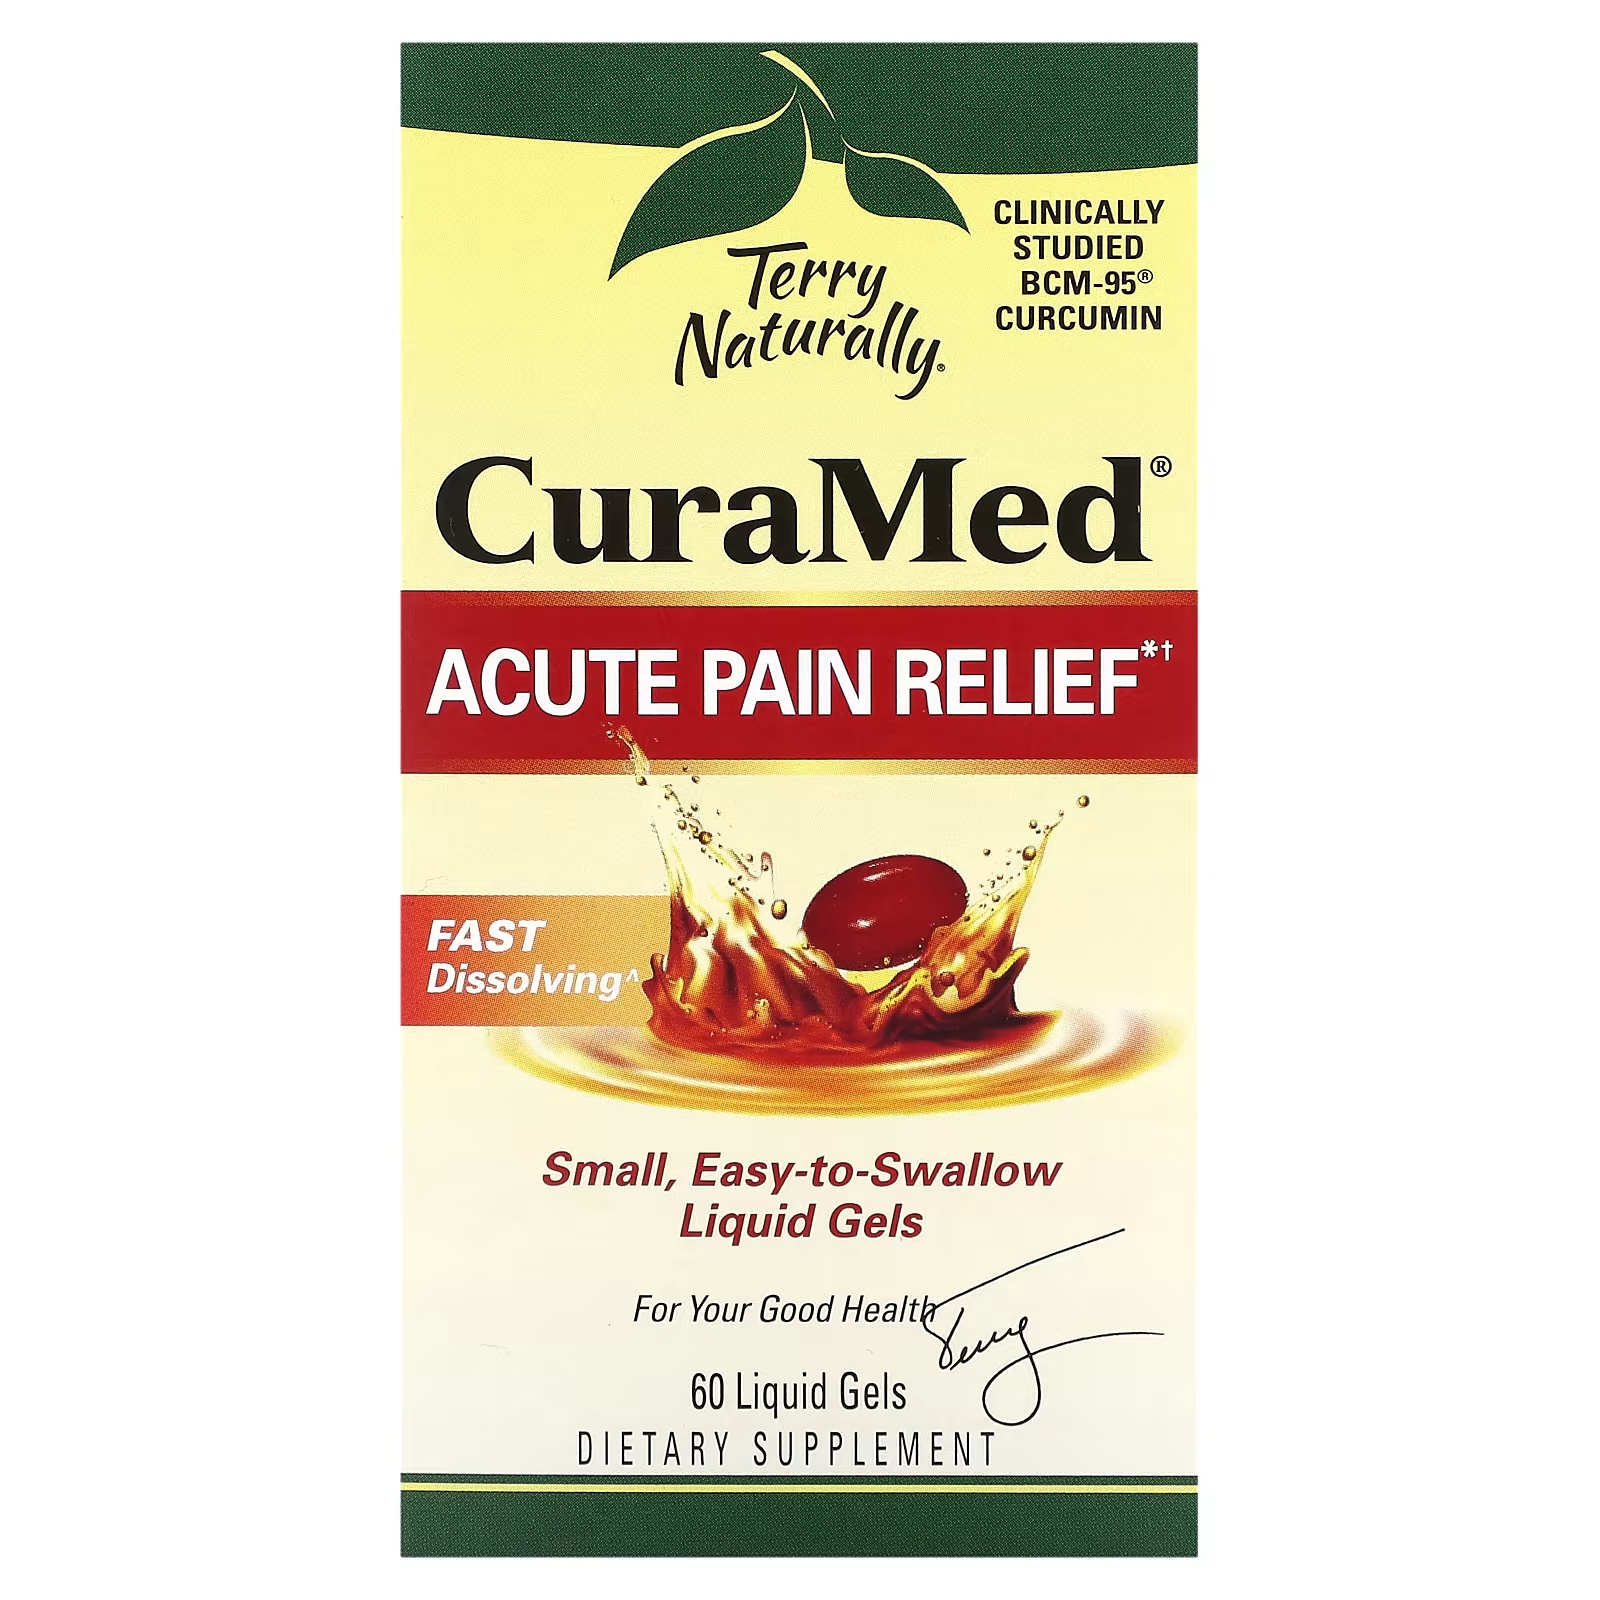 Обезболивающее средство Terry Naturally CuraMed от острой боли, 60 жидких гелей 80pcs hot tiger balm pain relief patch fast relief aches pains